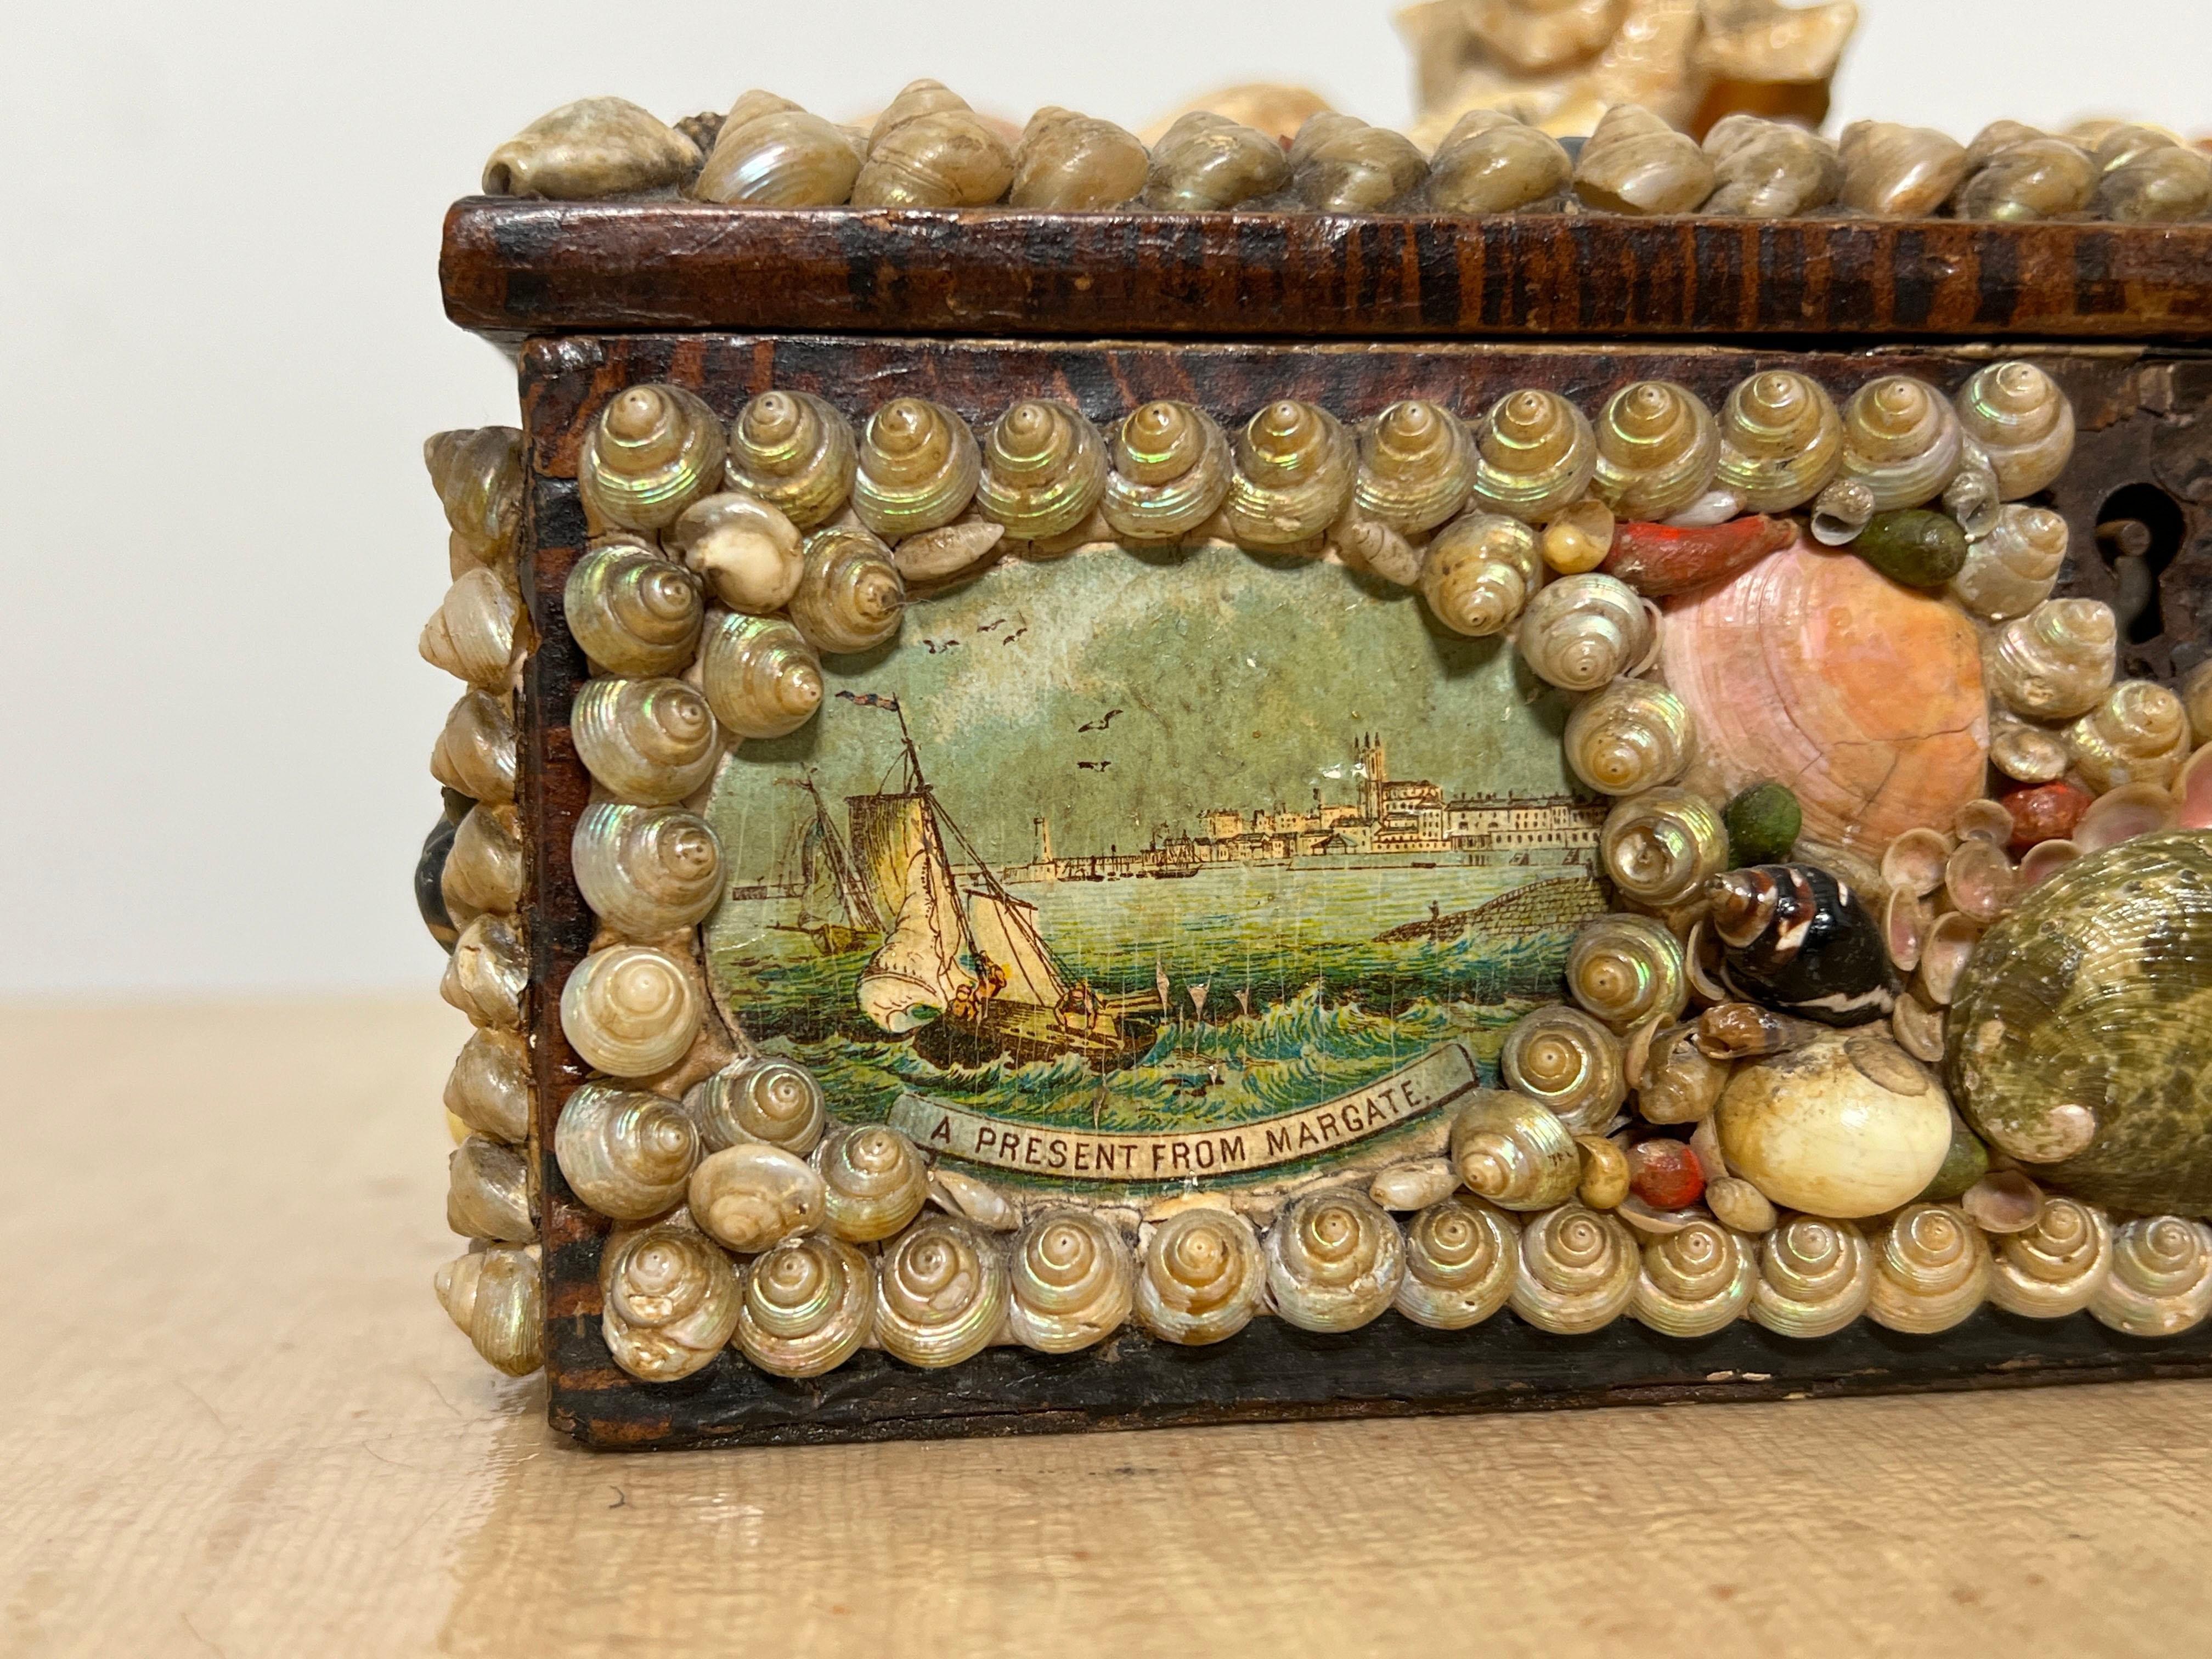 British Victorian Era Margate Grotto England Seashell and Painted Souvenir Trinket Box